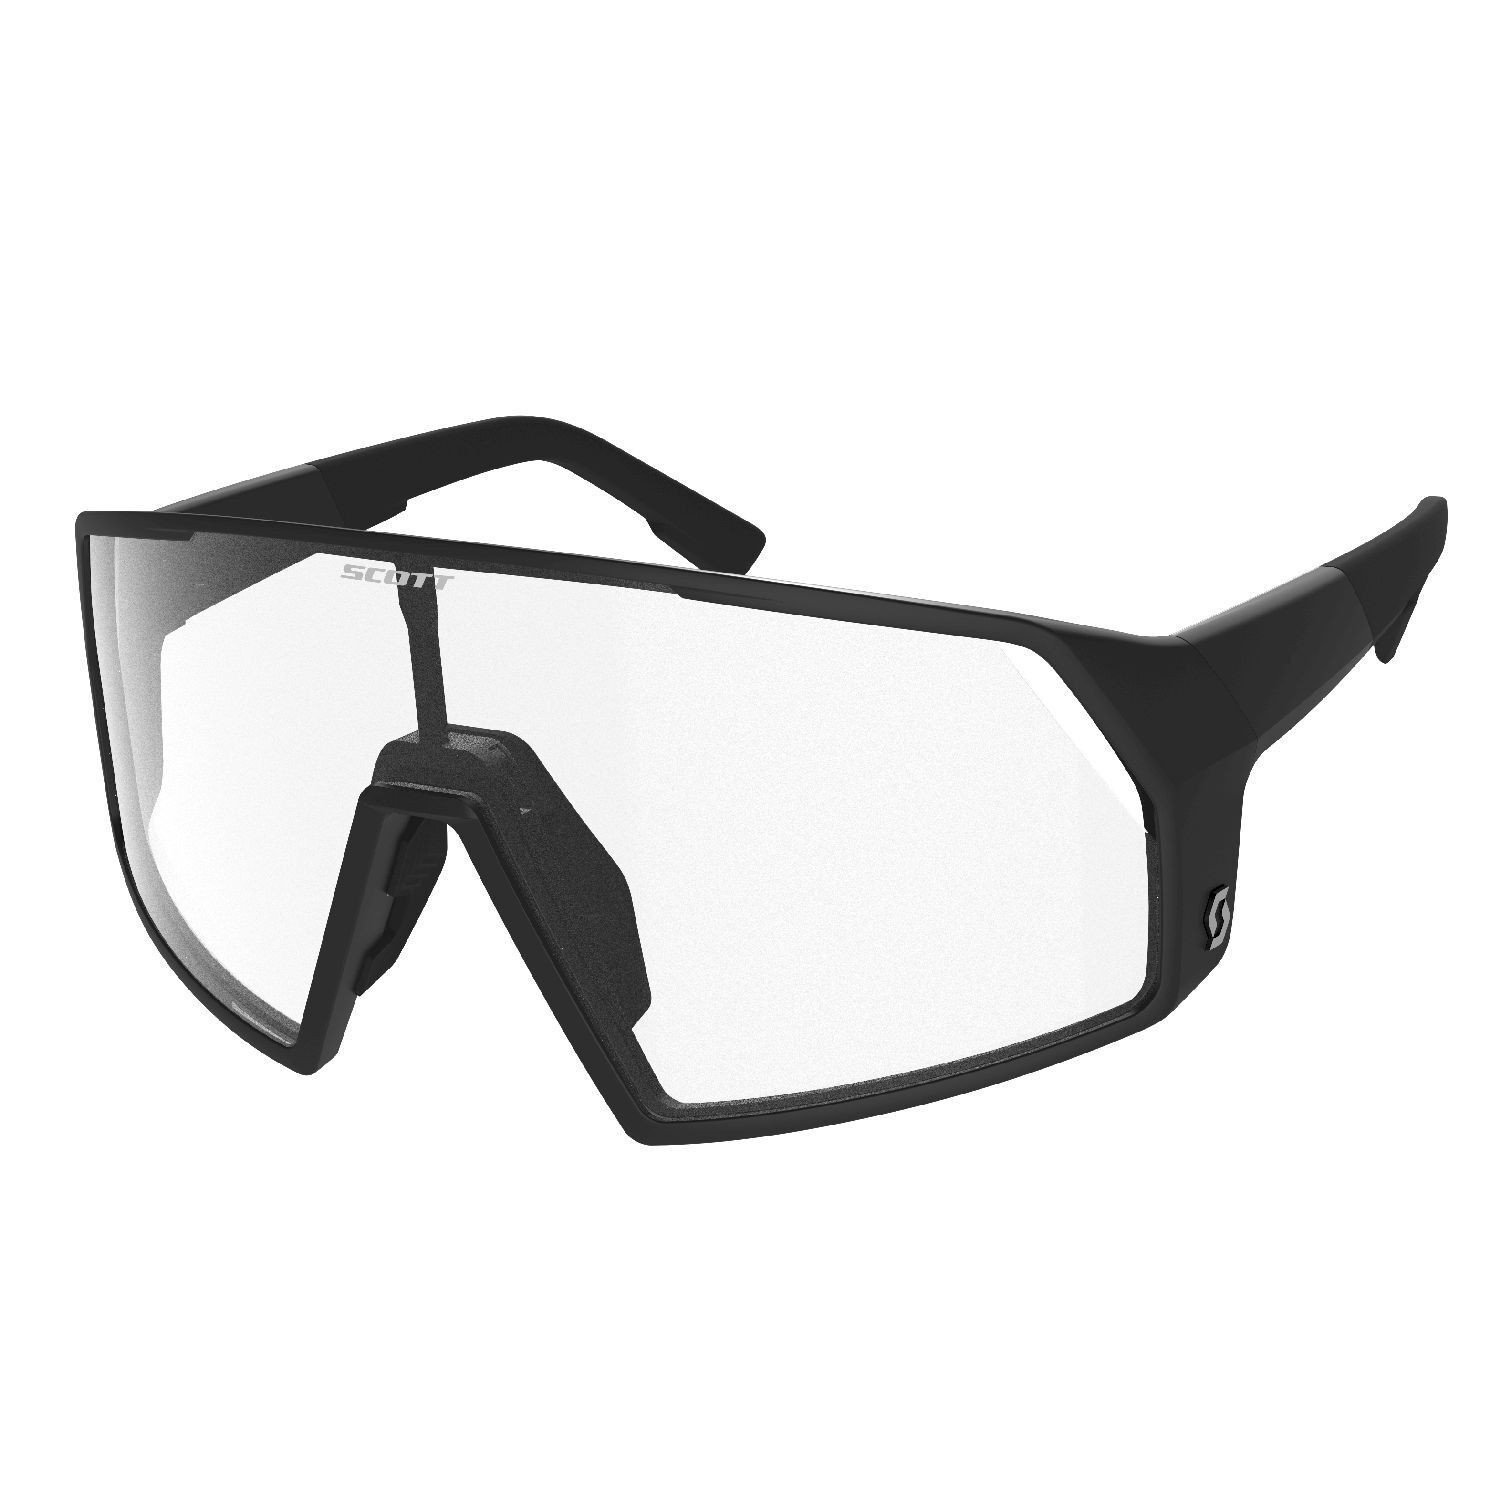 Scott Pro Shield - Gafas de sol